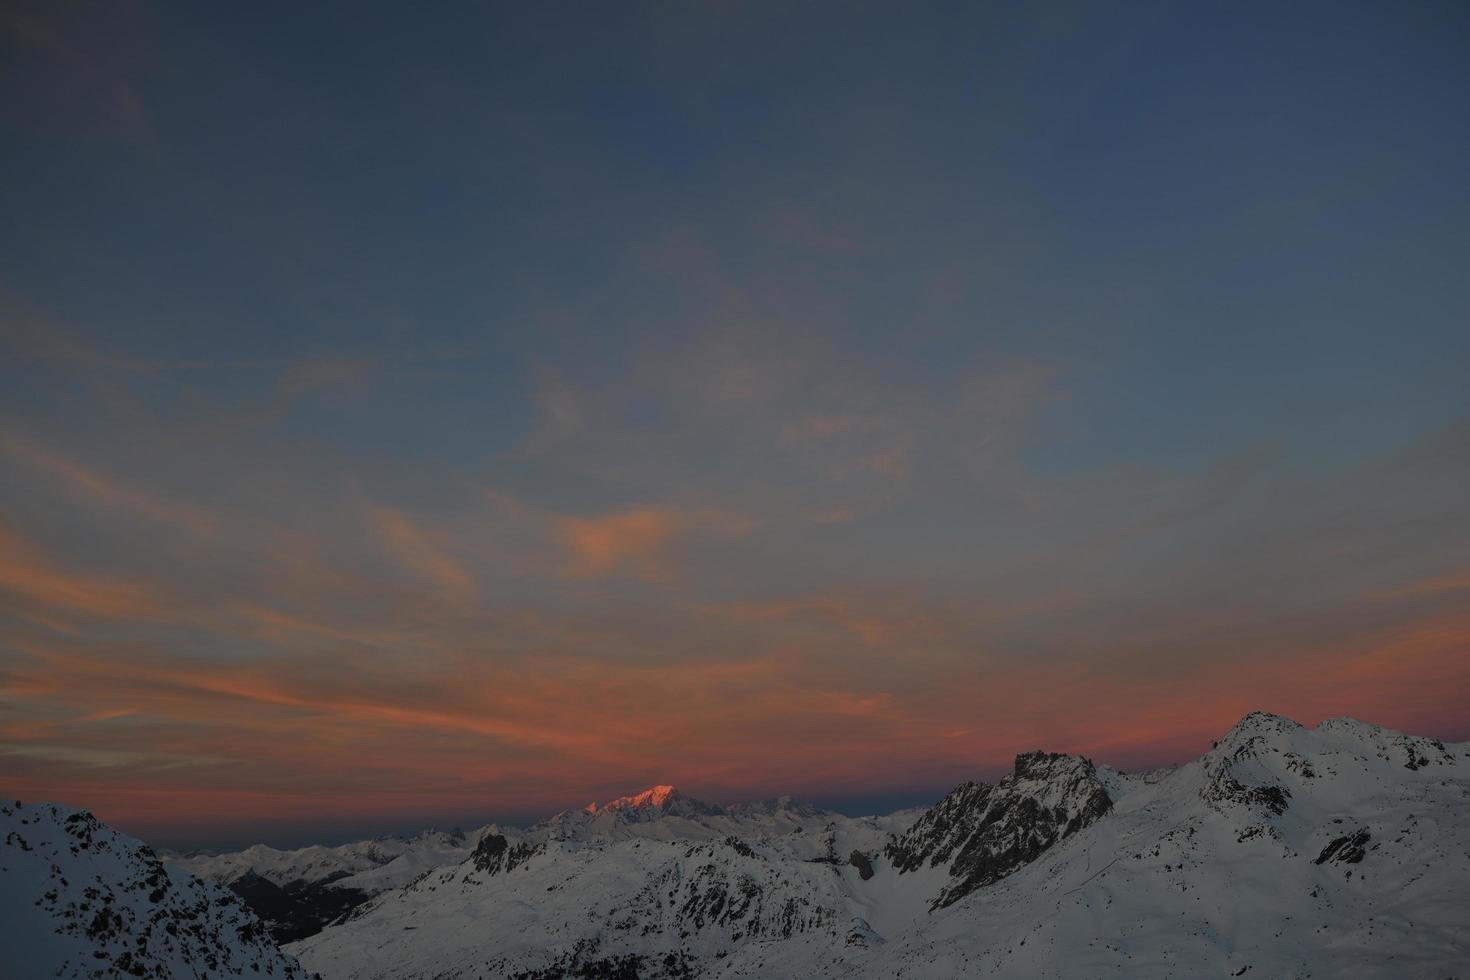 berg sneeuw zonsondergang foto